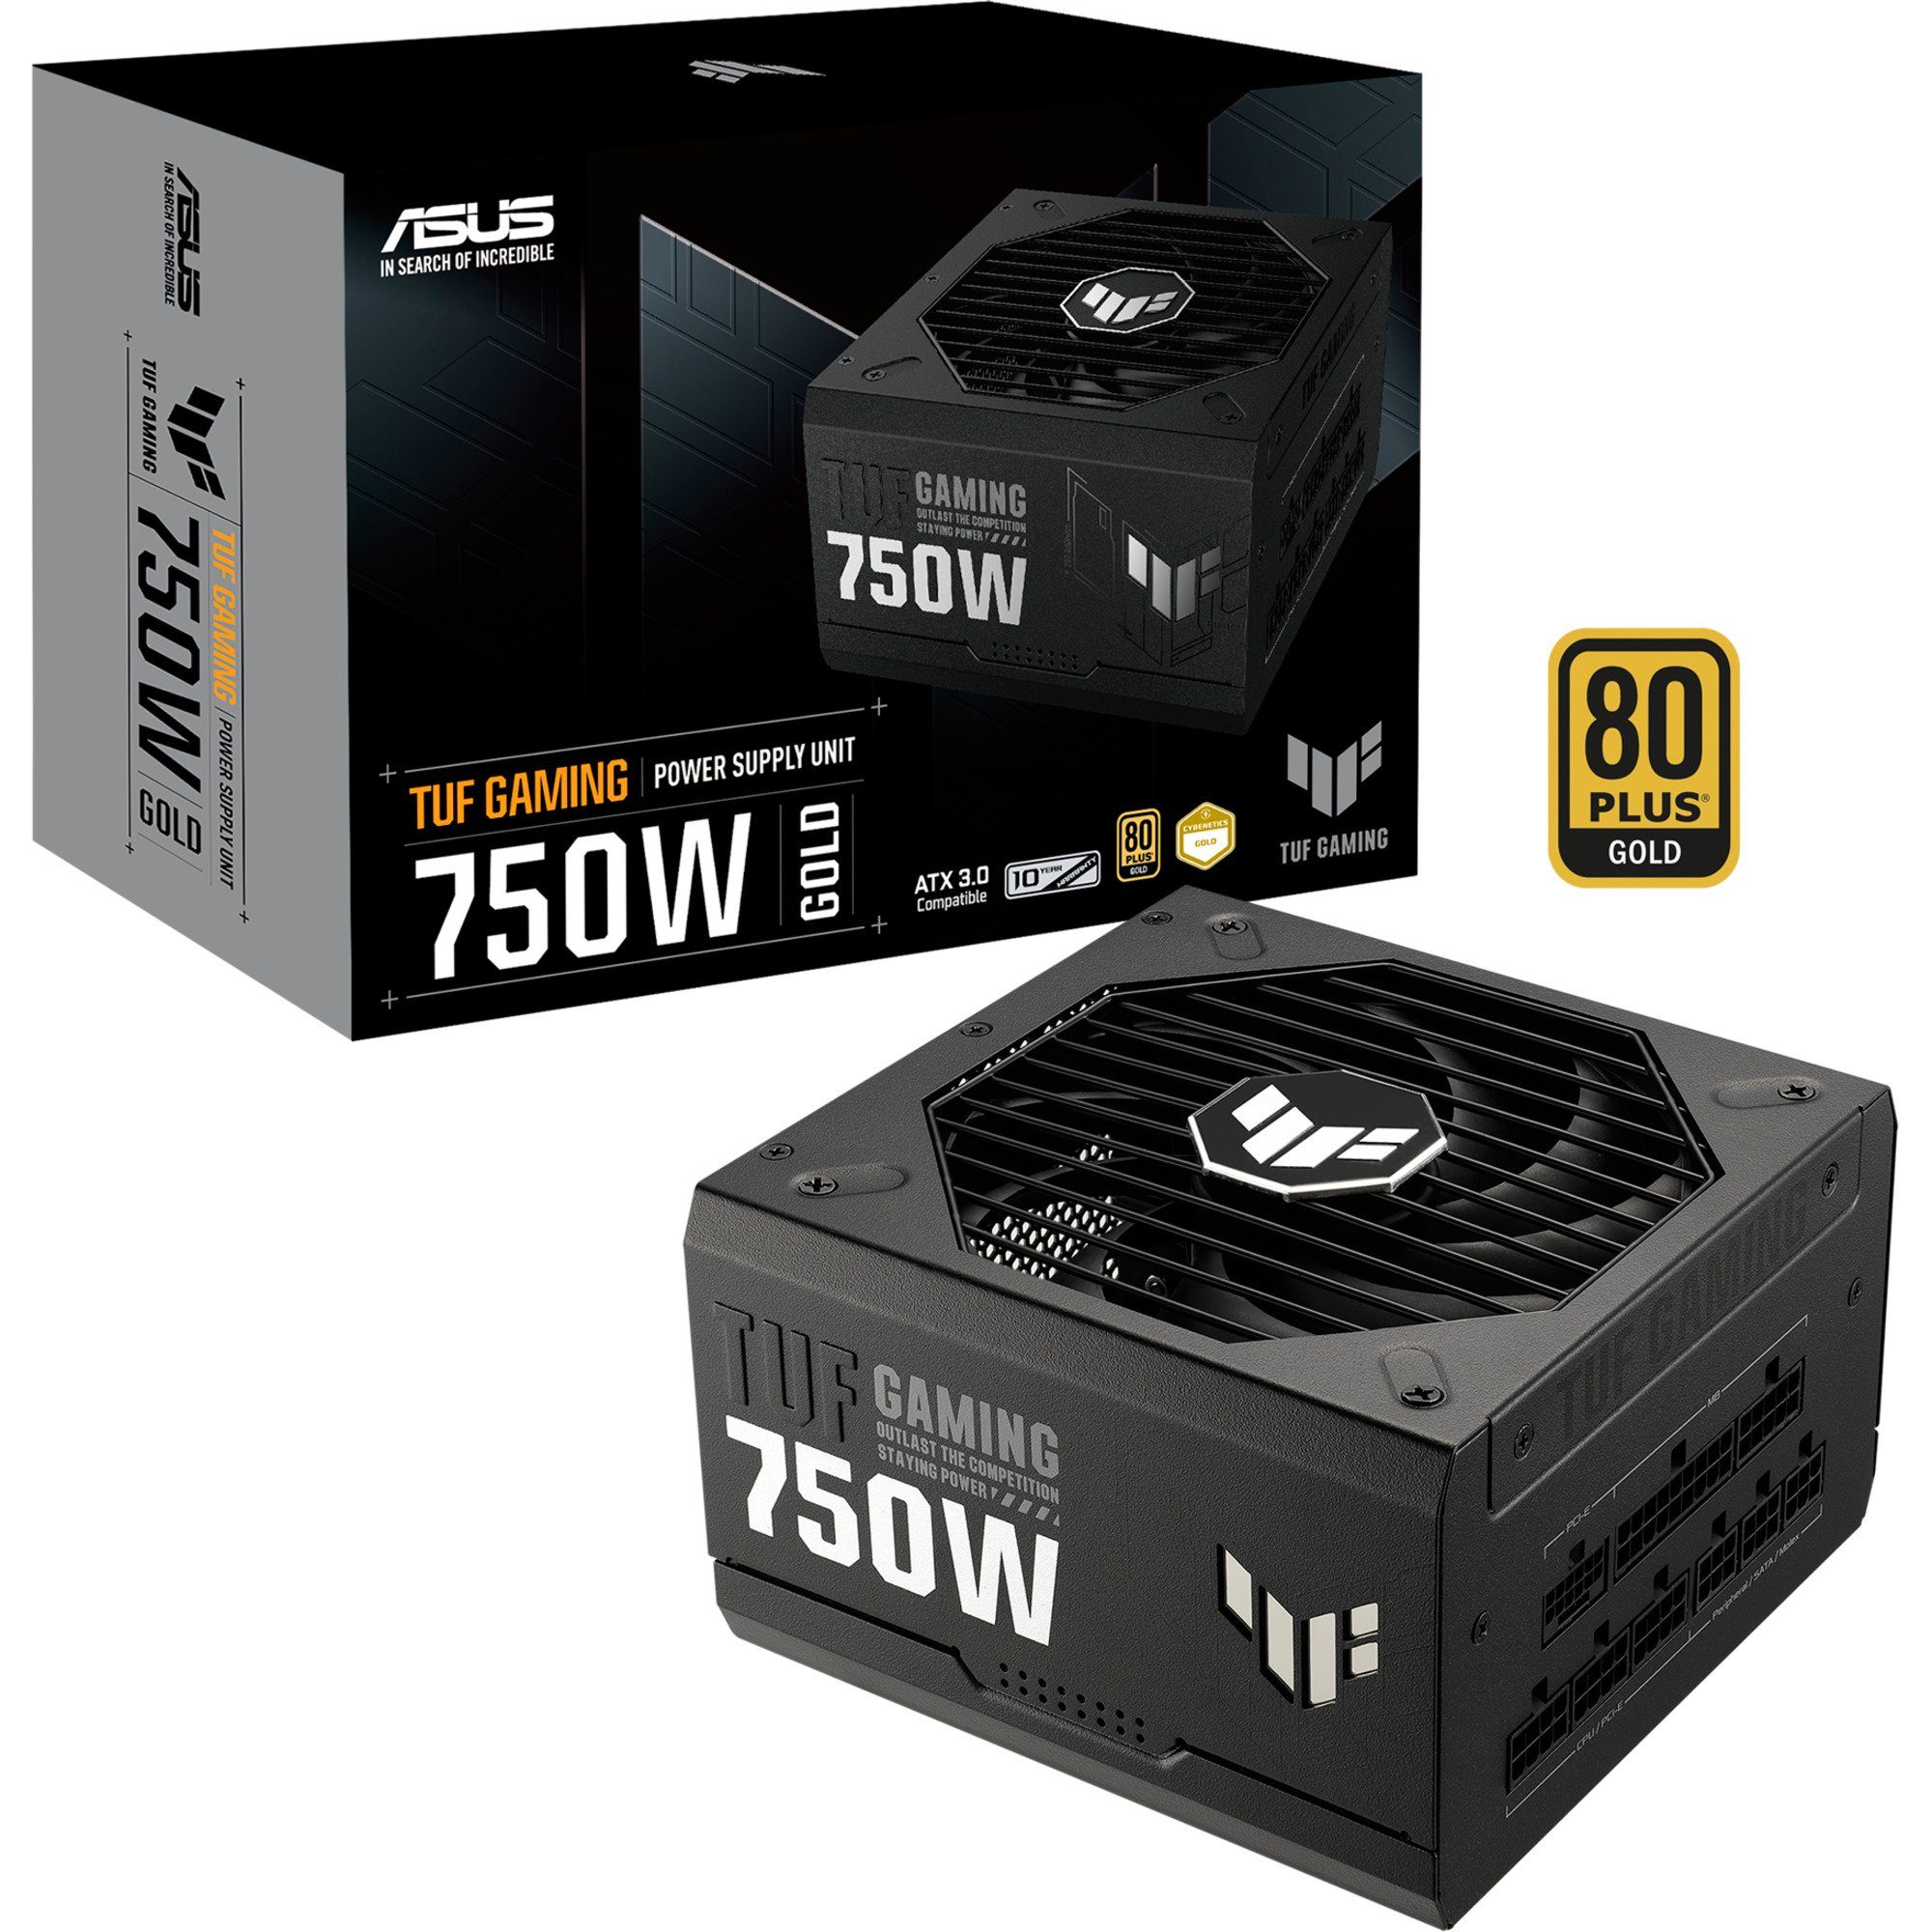 Asus »TUF Gaming 750W Gold, 4x PCIe, Kabel-Management« PC-Netzteil